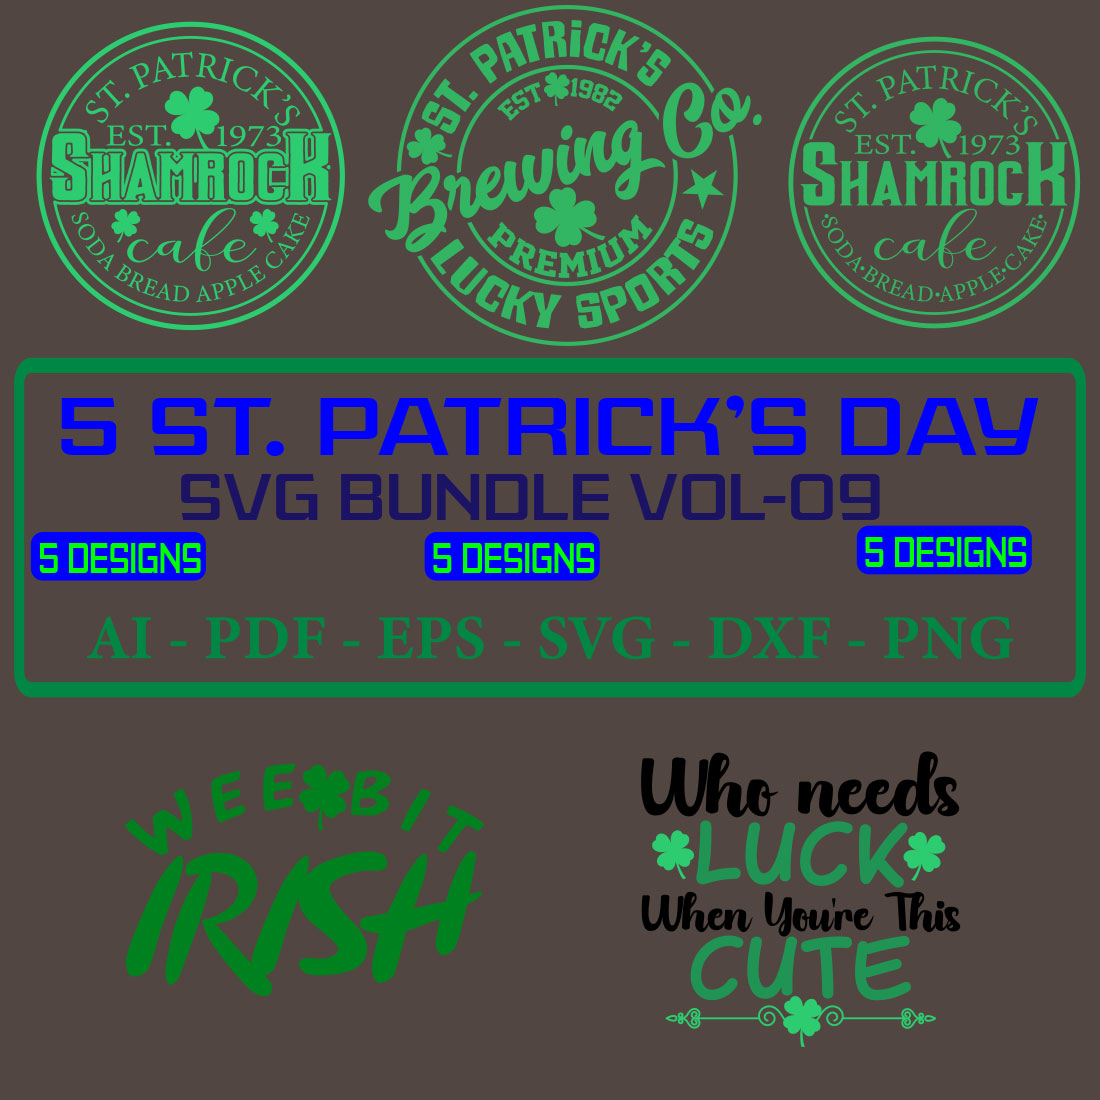 5 St Patrick’s Day SVG Bundle Vol 09 cover image.